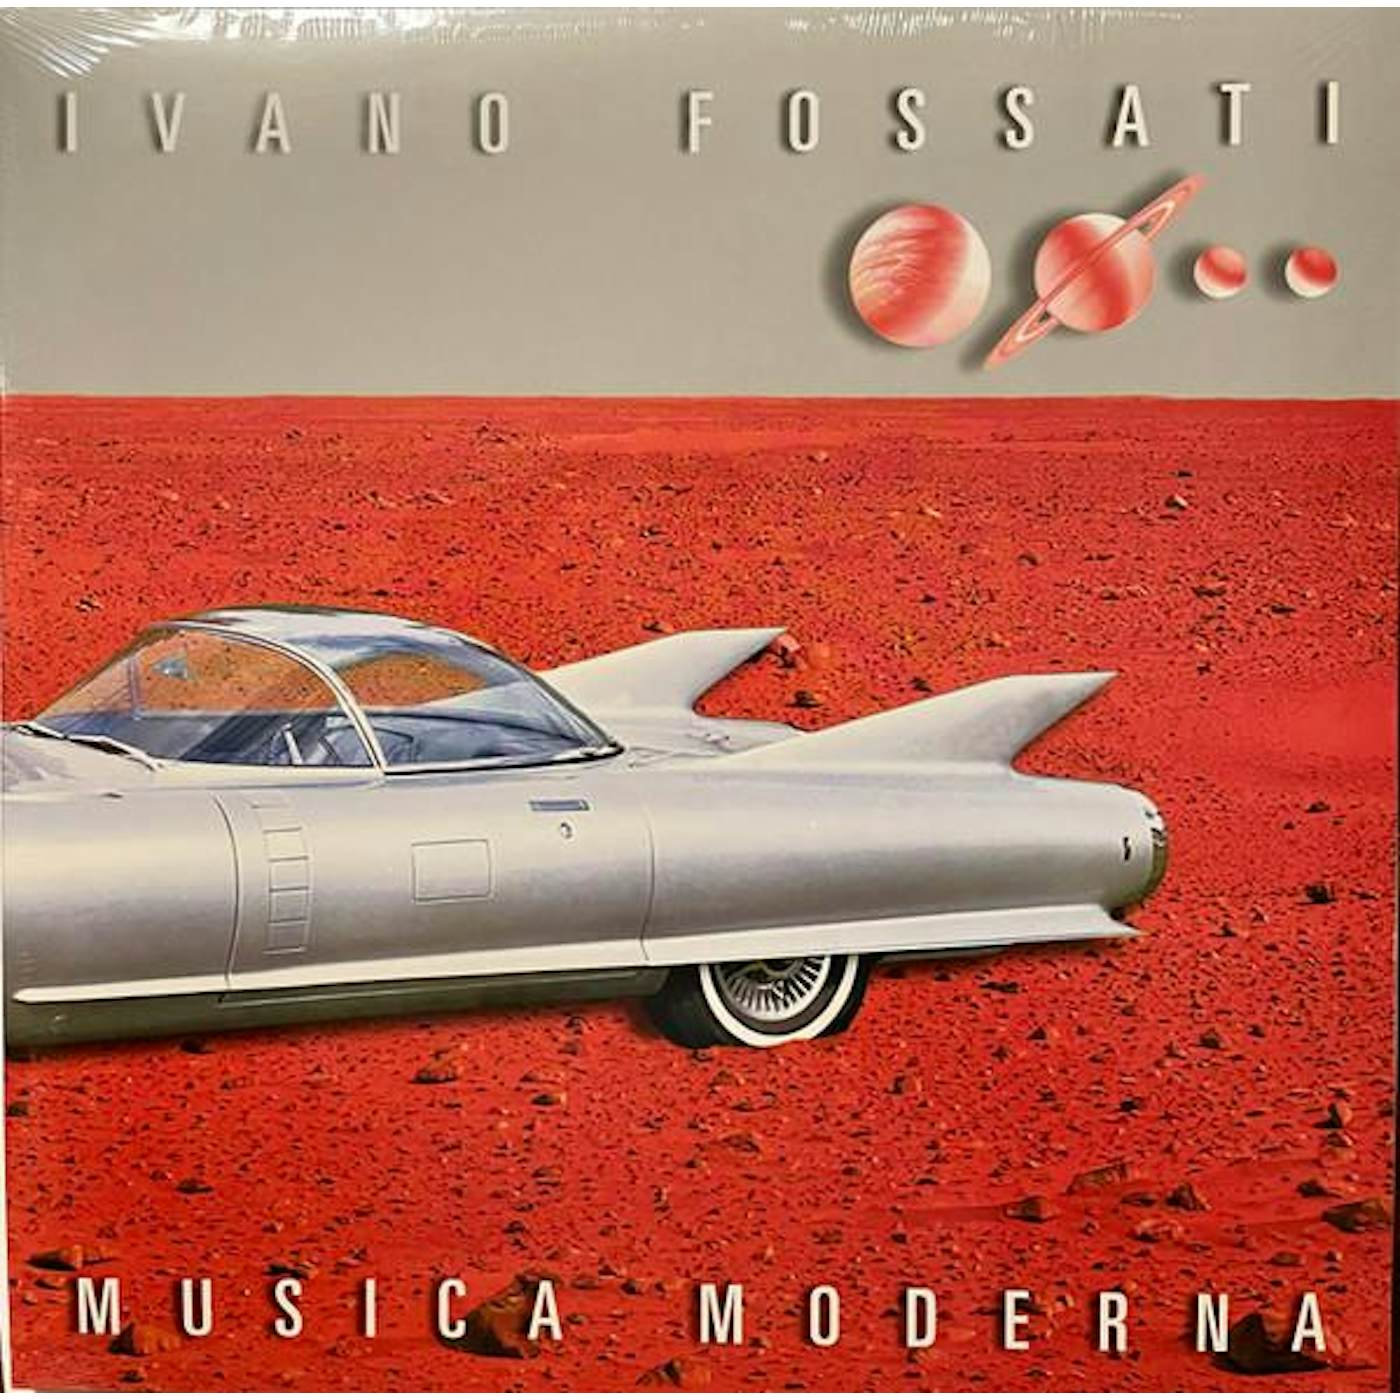 Ivano Fossati Musica Moderna Vinyl Record